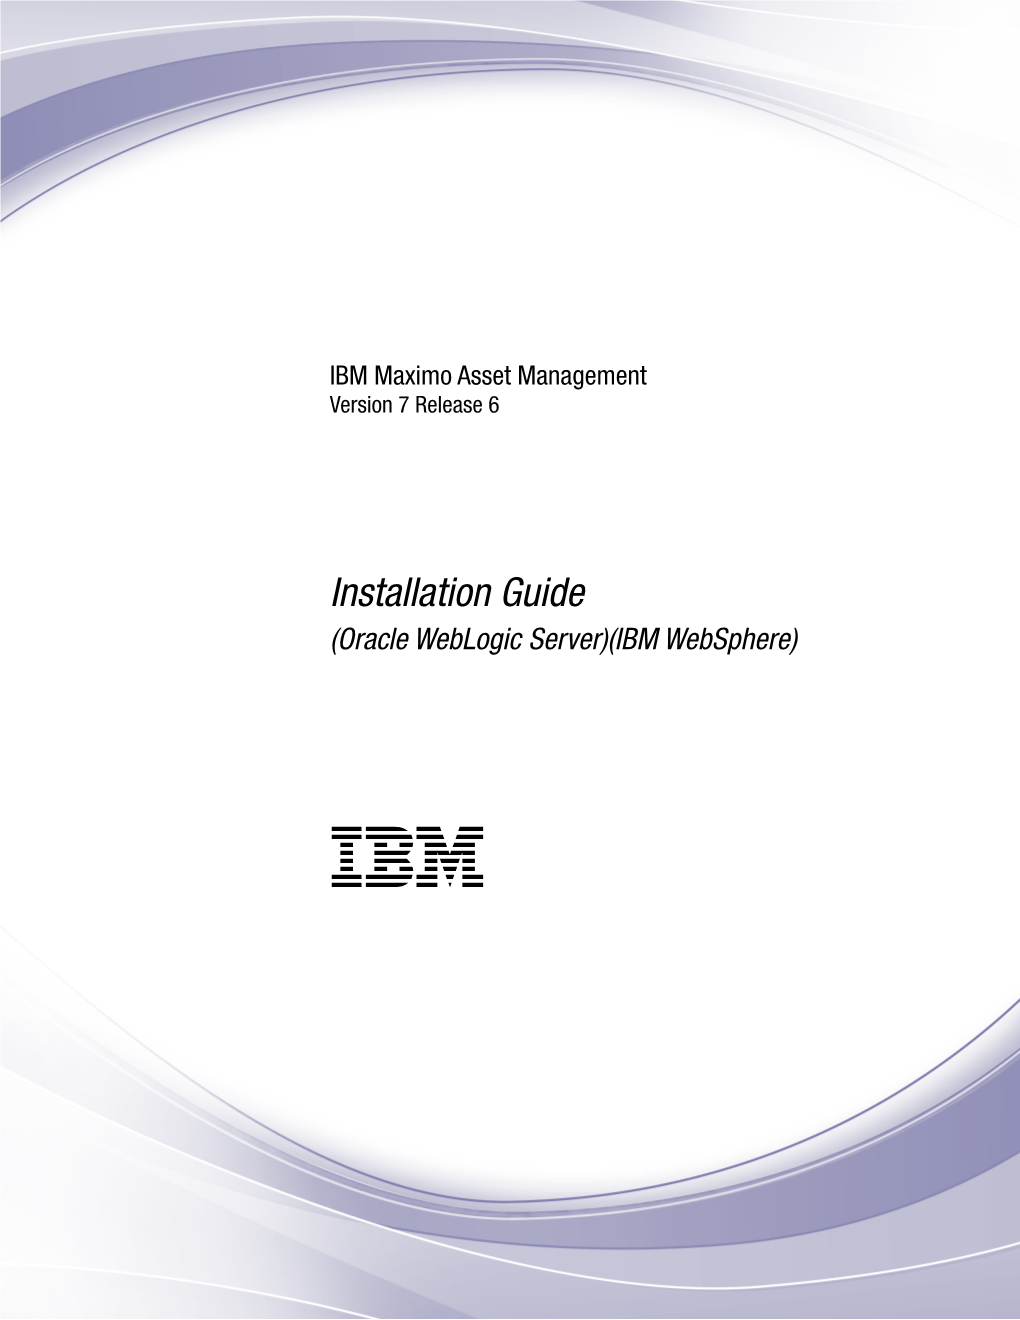 IBM Maximo Asset Management: Installation Guide (Oracle Weblogic Server)(IBM Websphere) Chapter 19